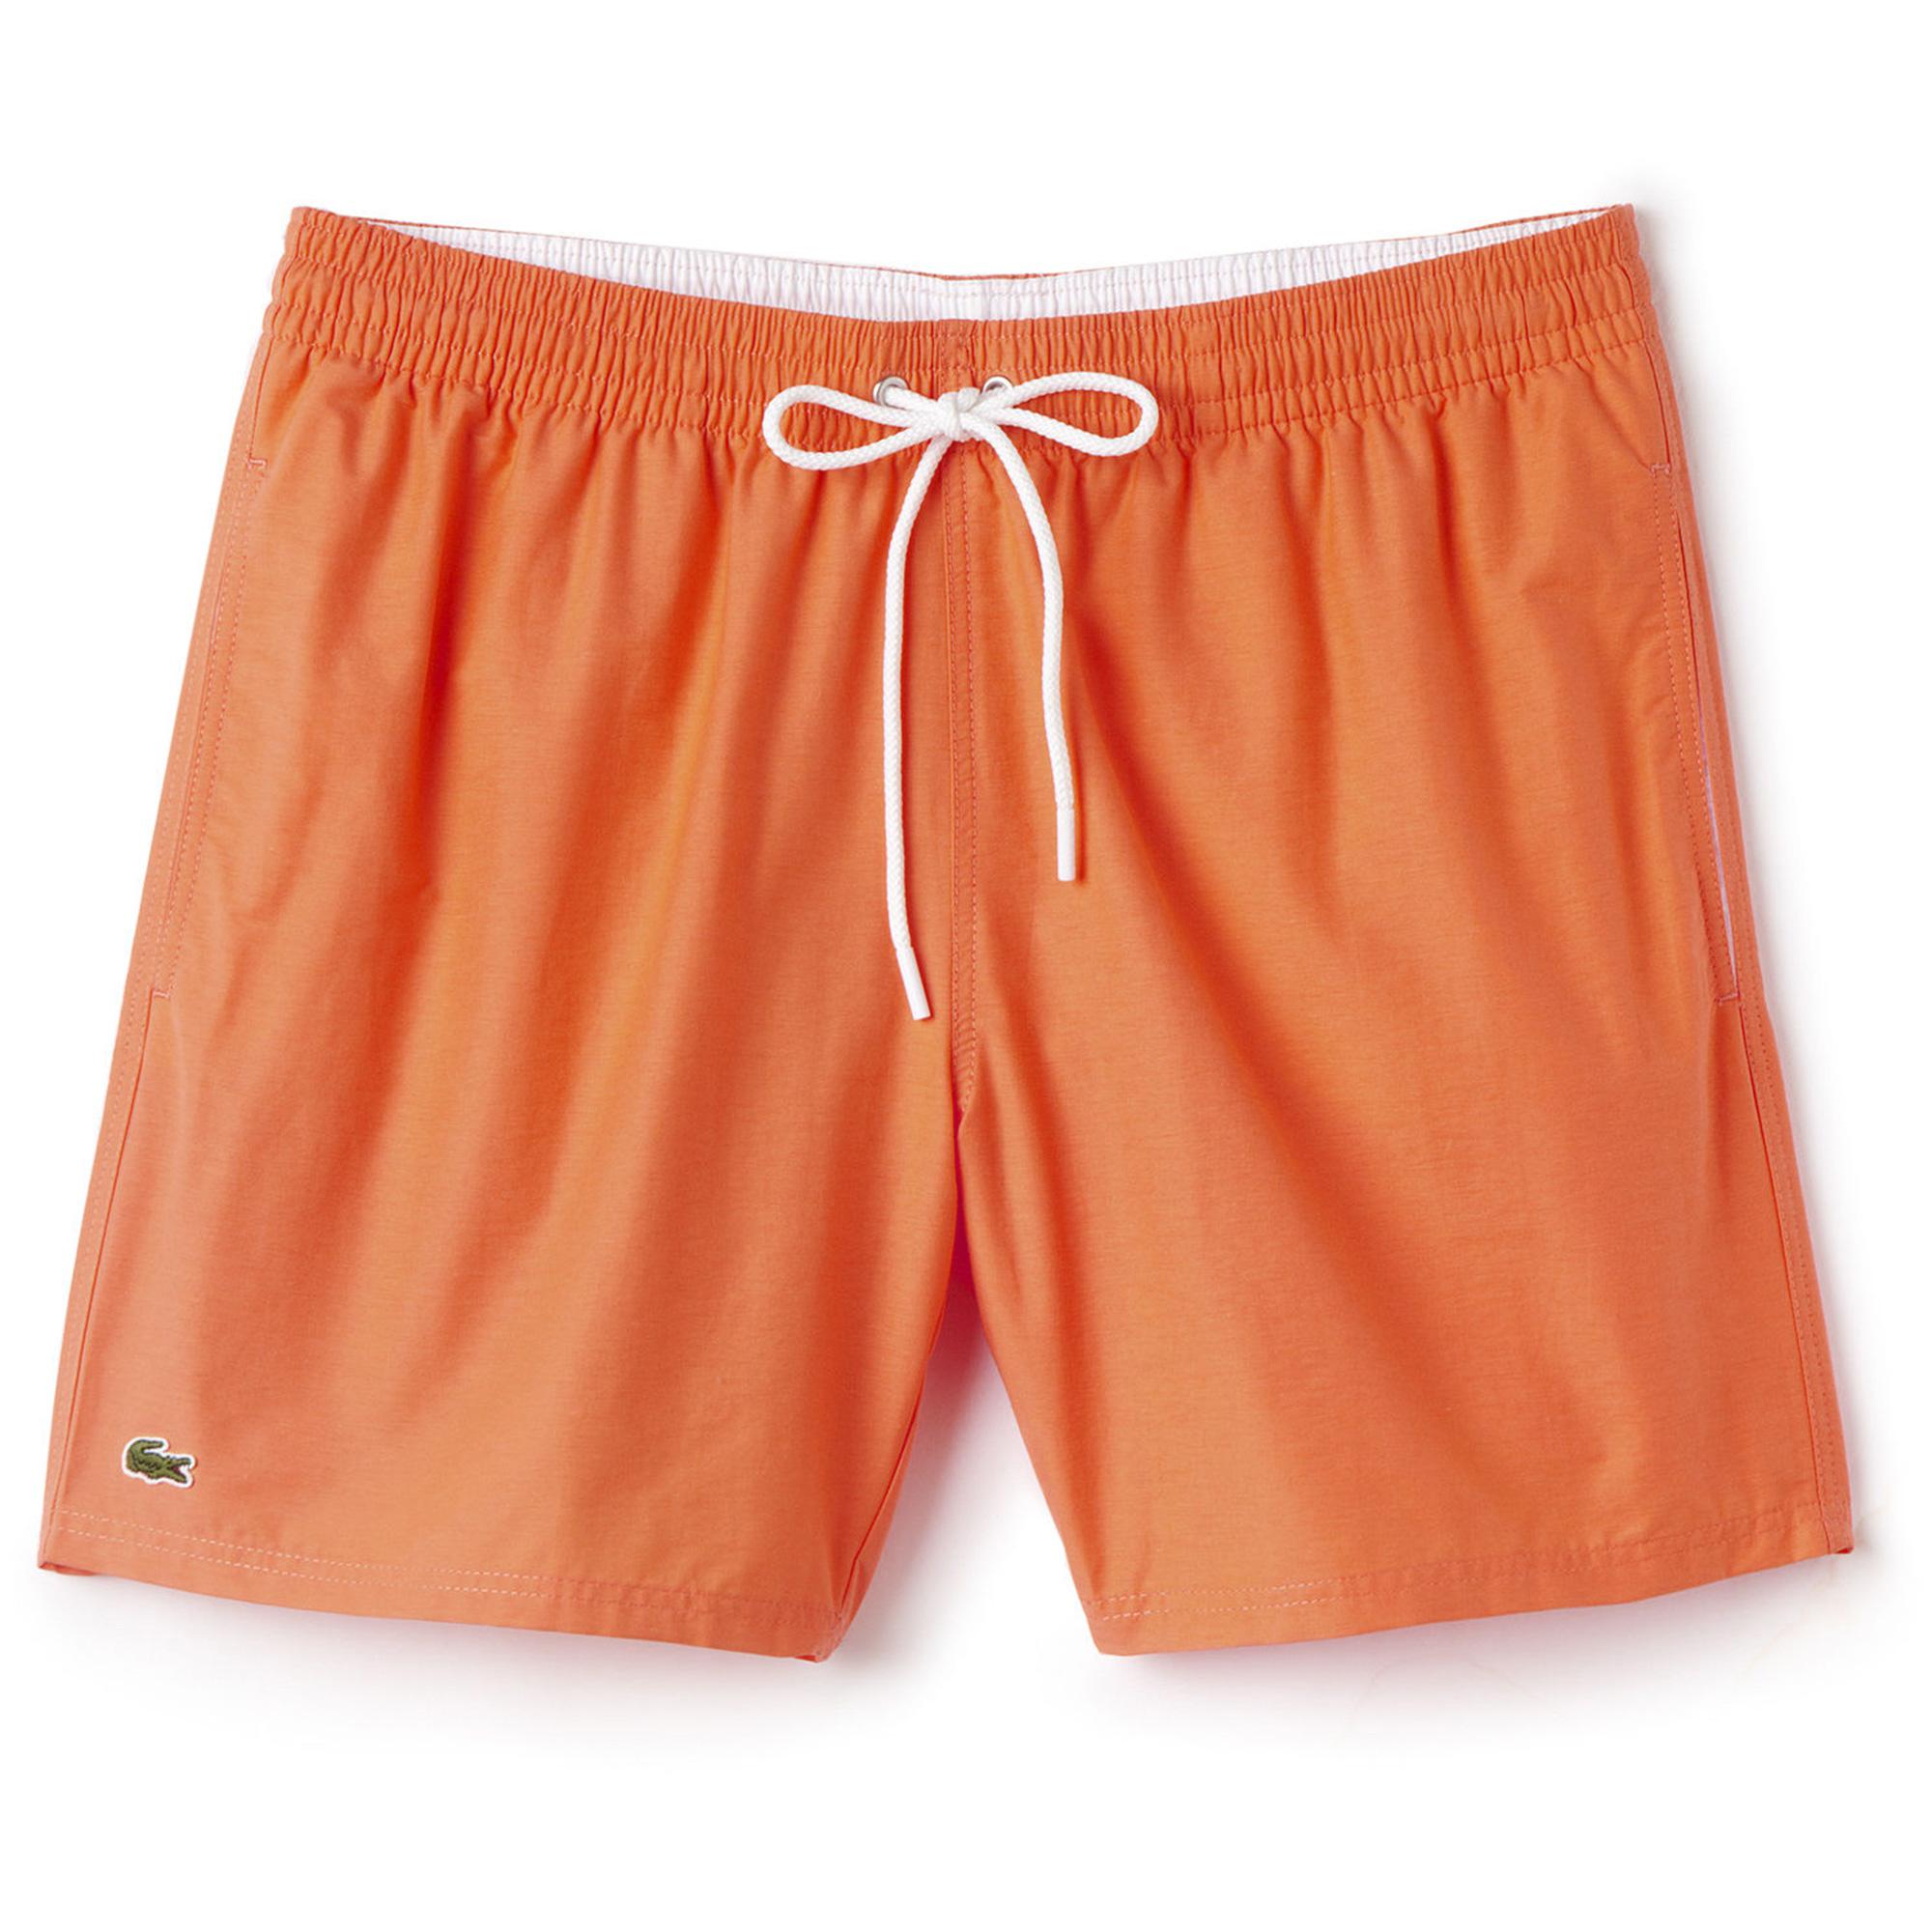 Lacoste Mens Leisure Shorts - Orange - Tennisnuts.com